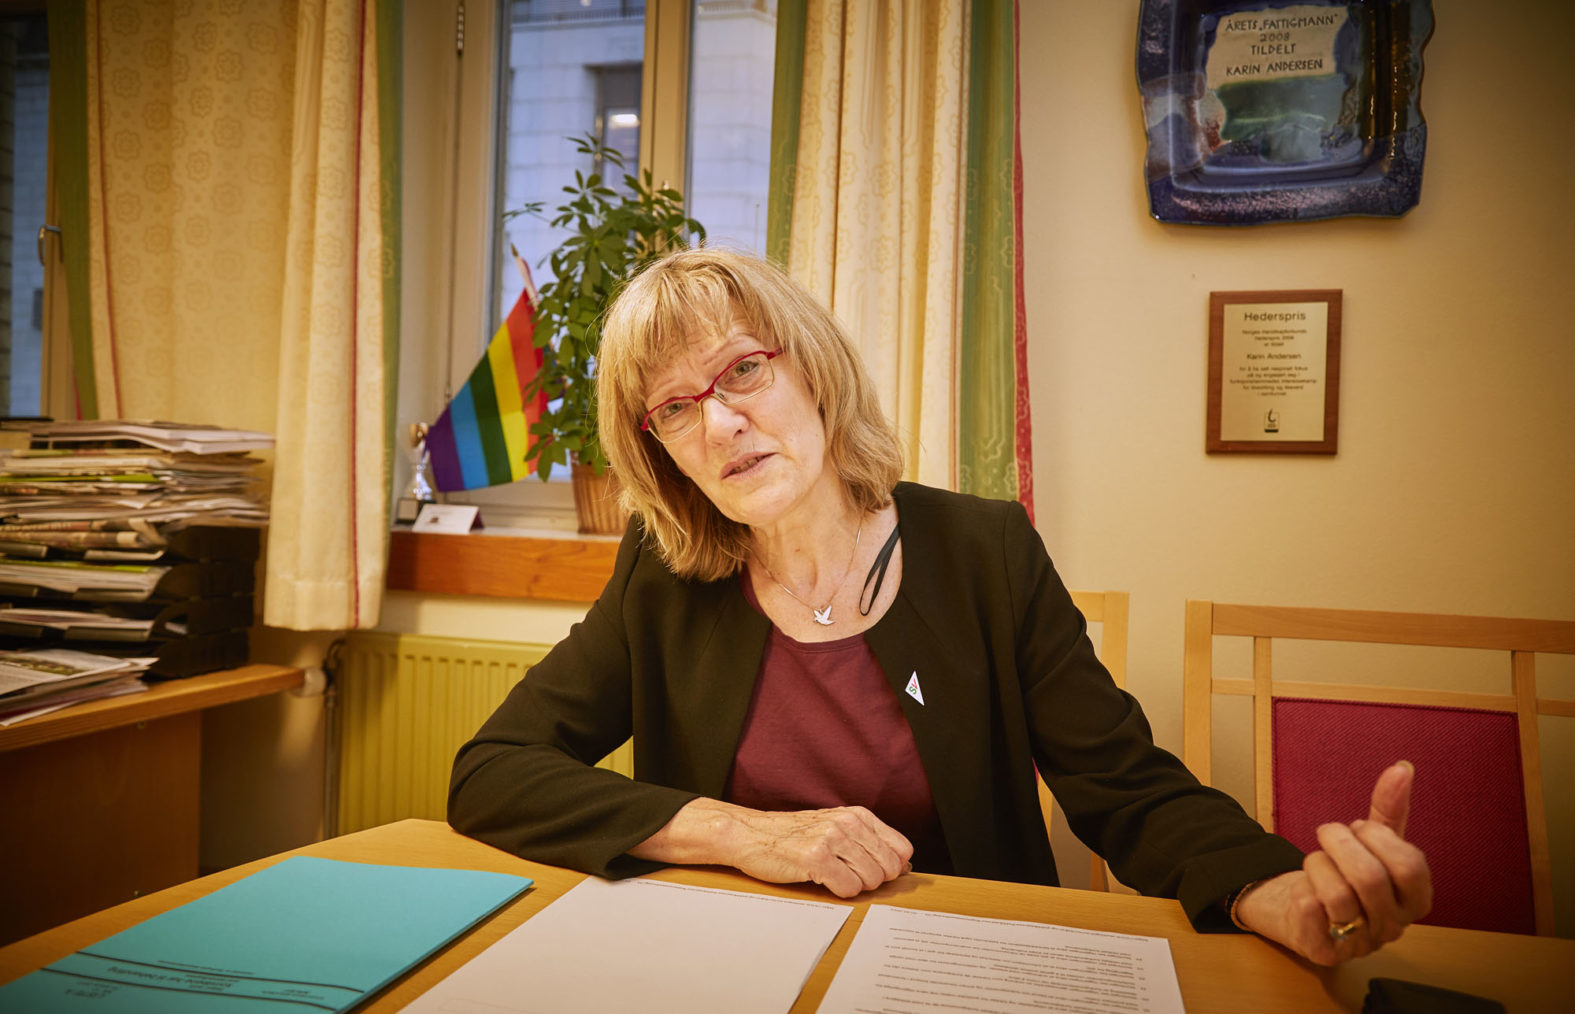 Karin Andersen ved skrivebordet på kontoret sitt.